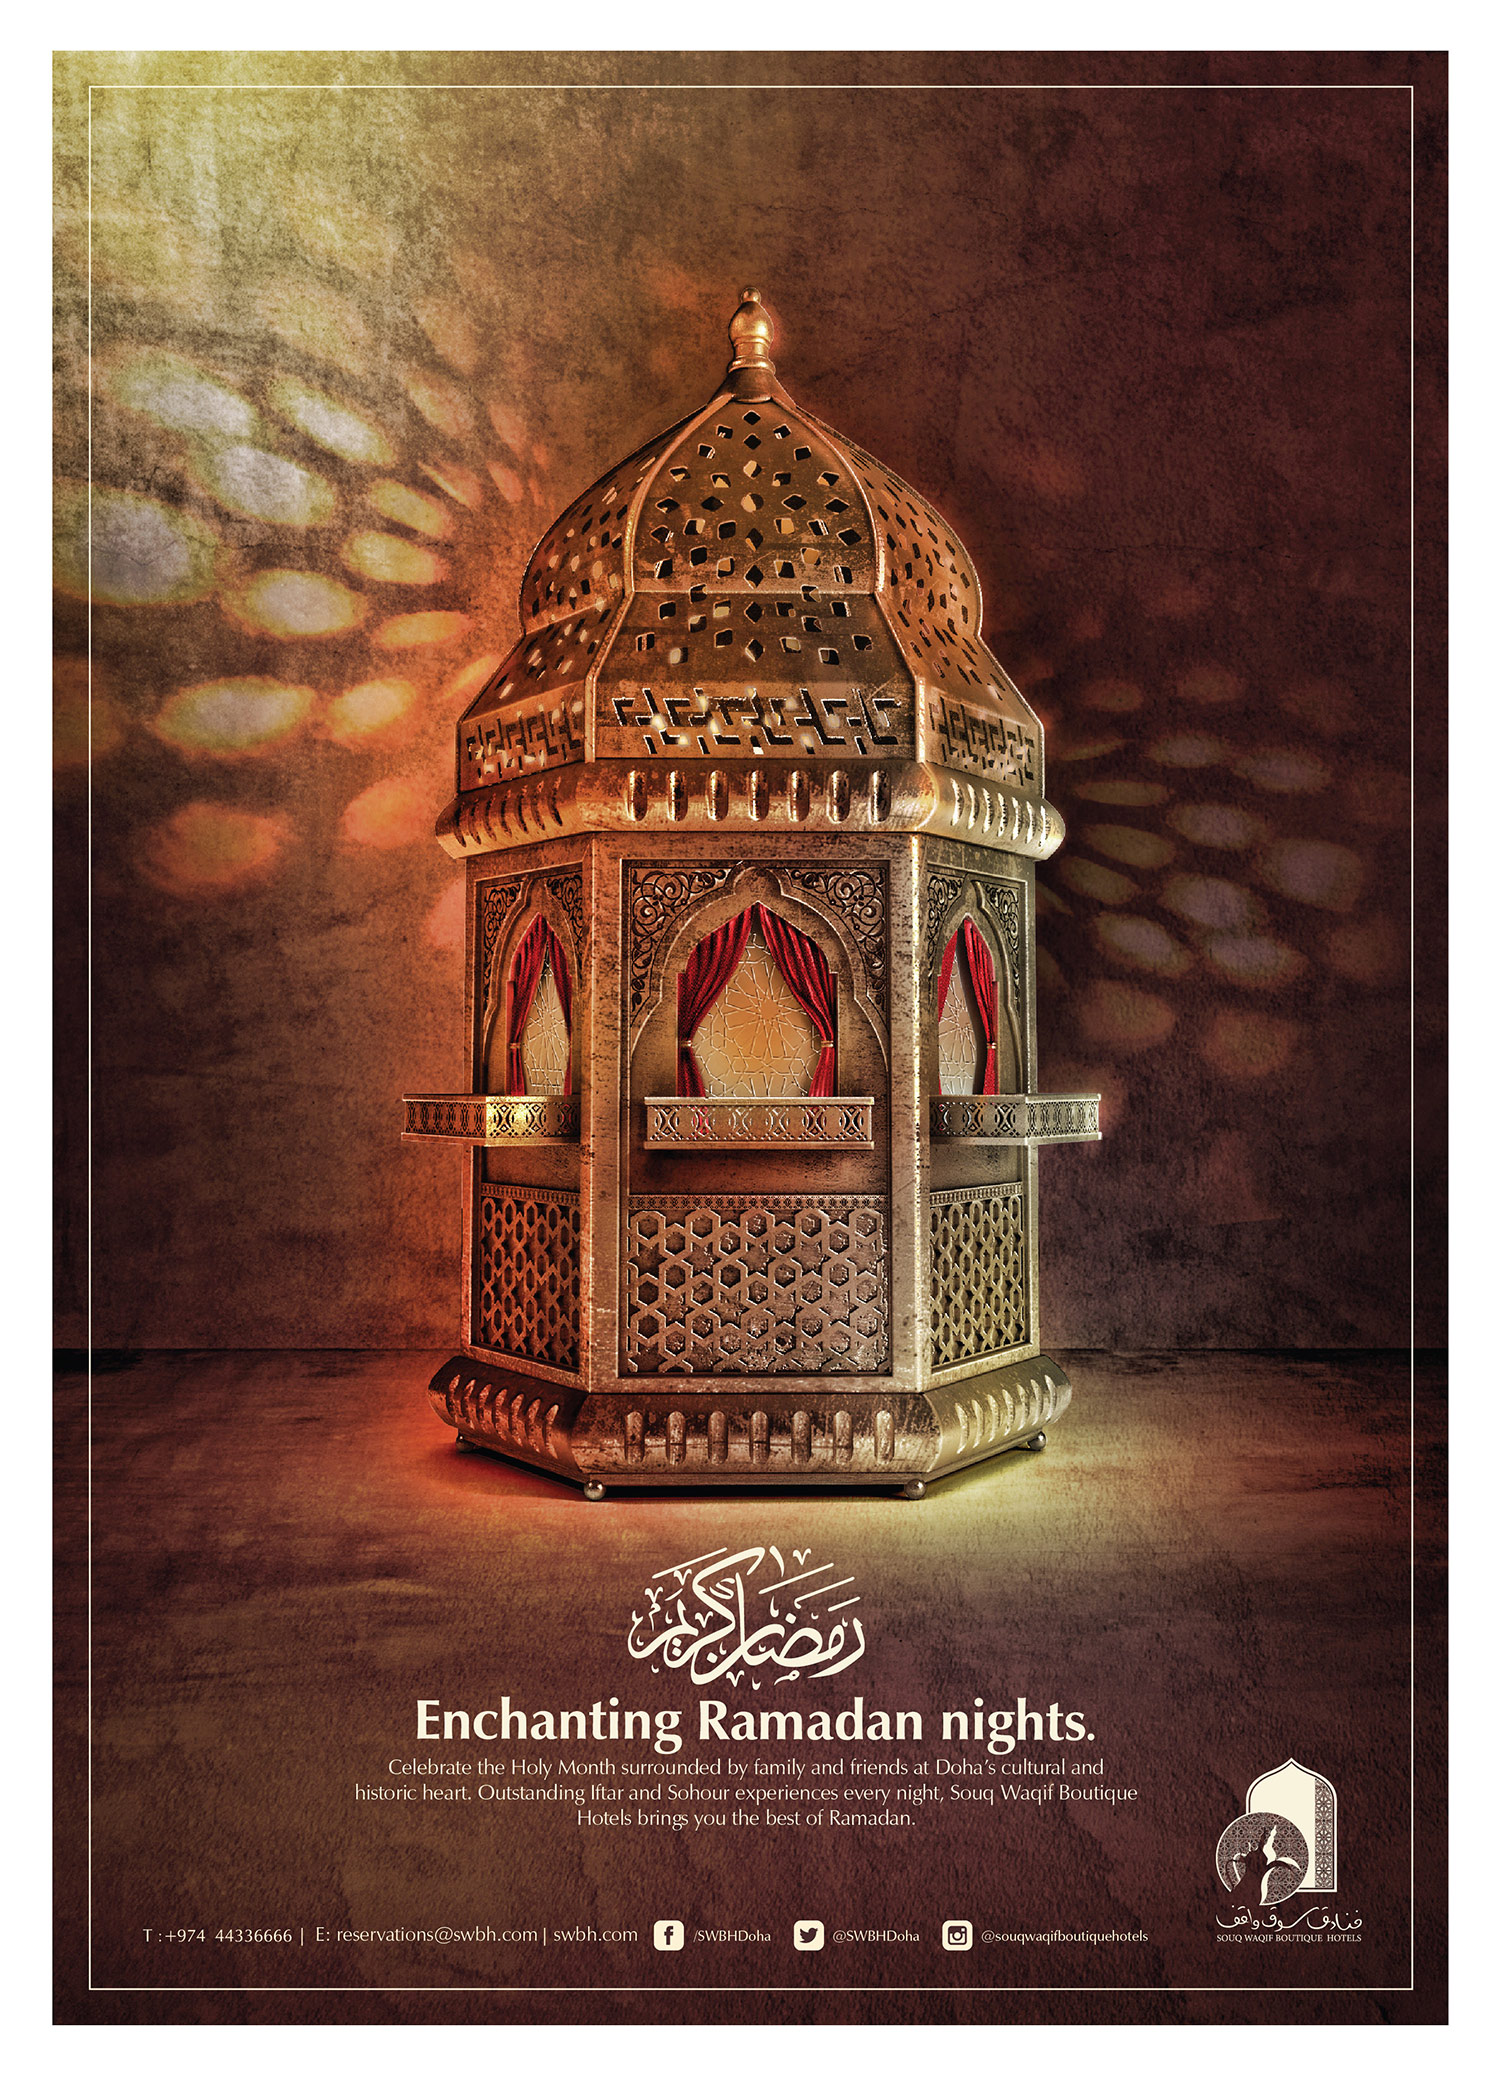 Enchanting Ramadan Nights. iBall Splendo Campaigns of the World®